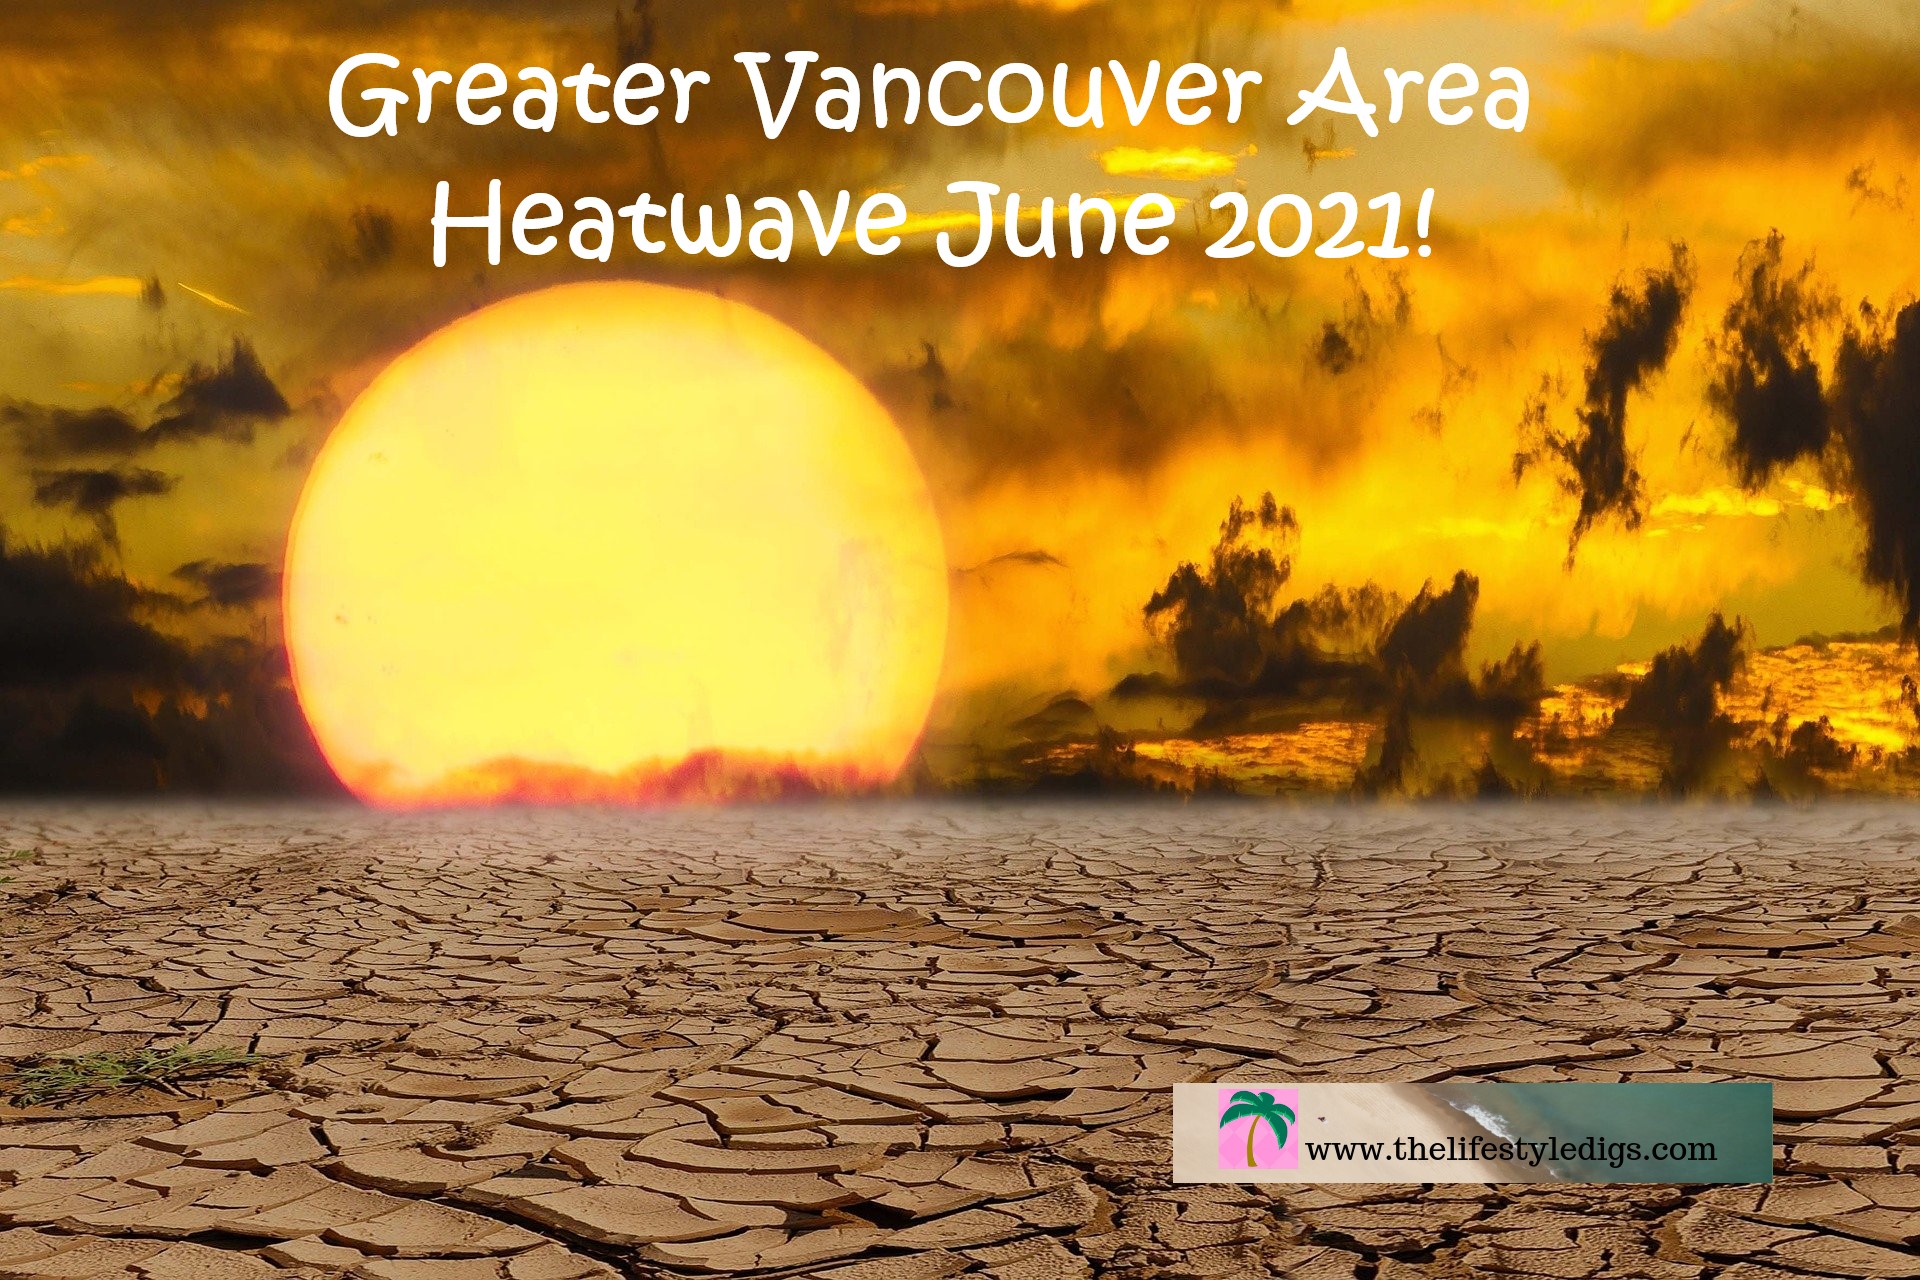 Greater Vancouver Area Heatwave June 2021!